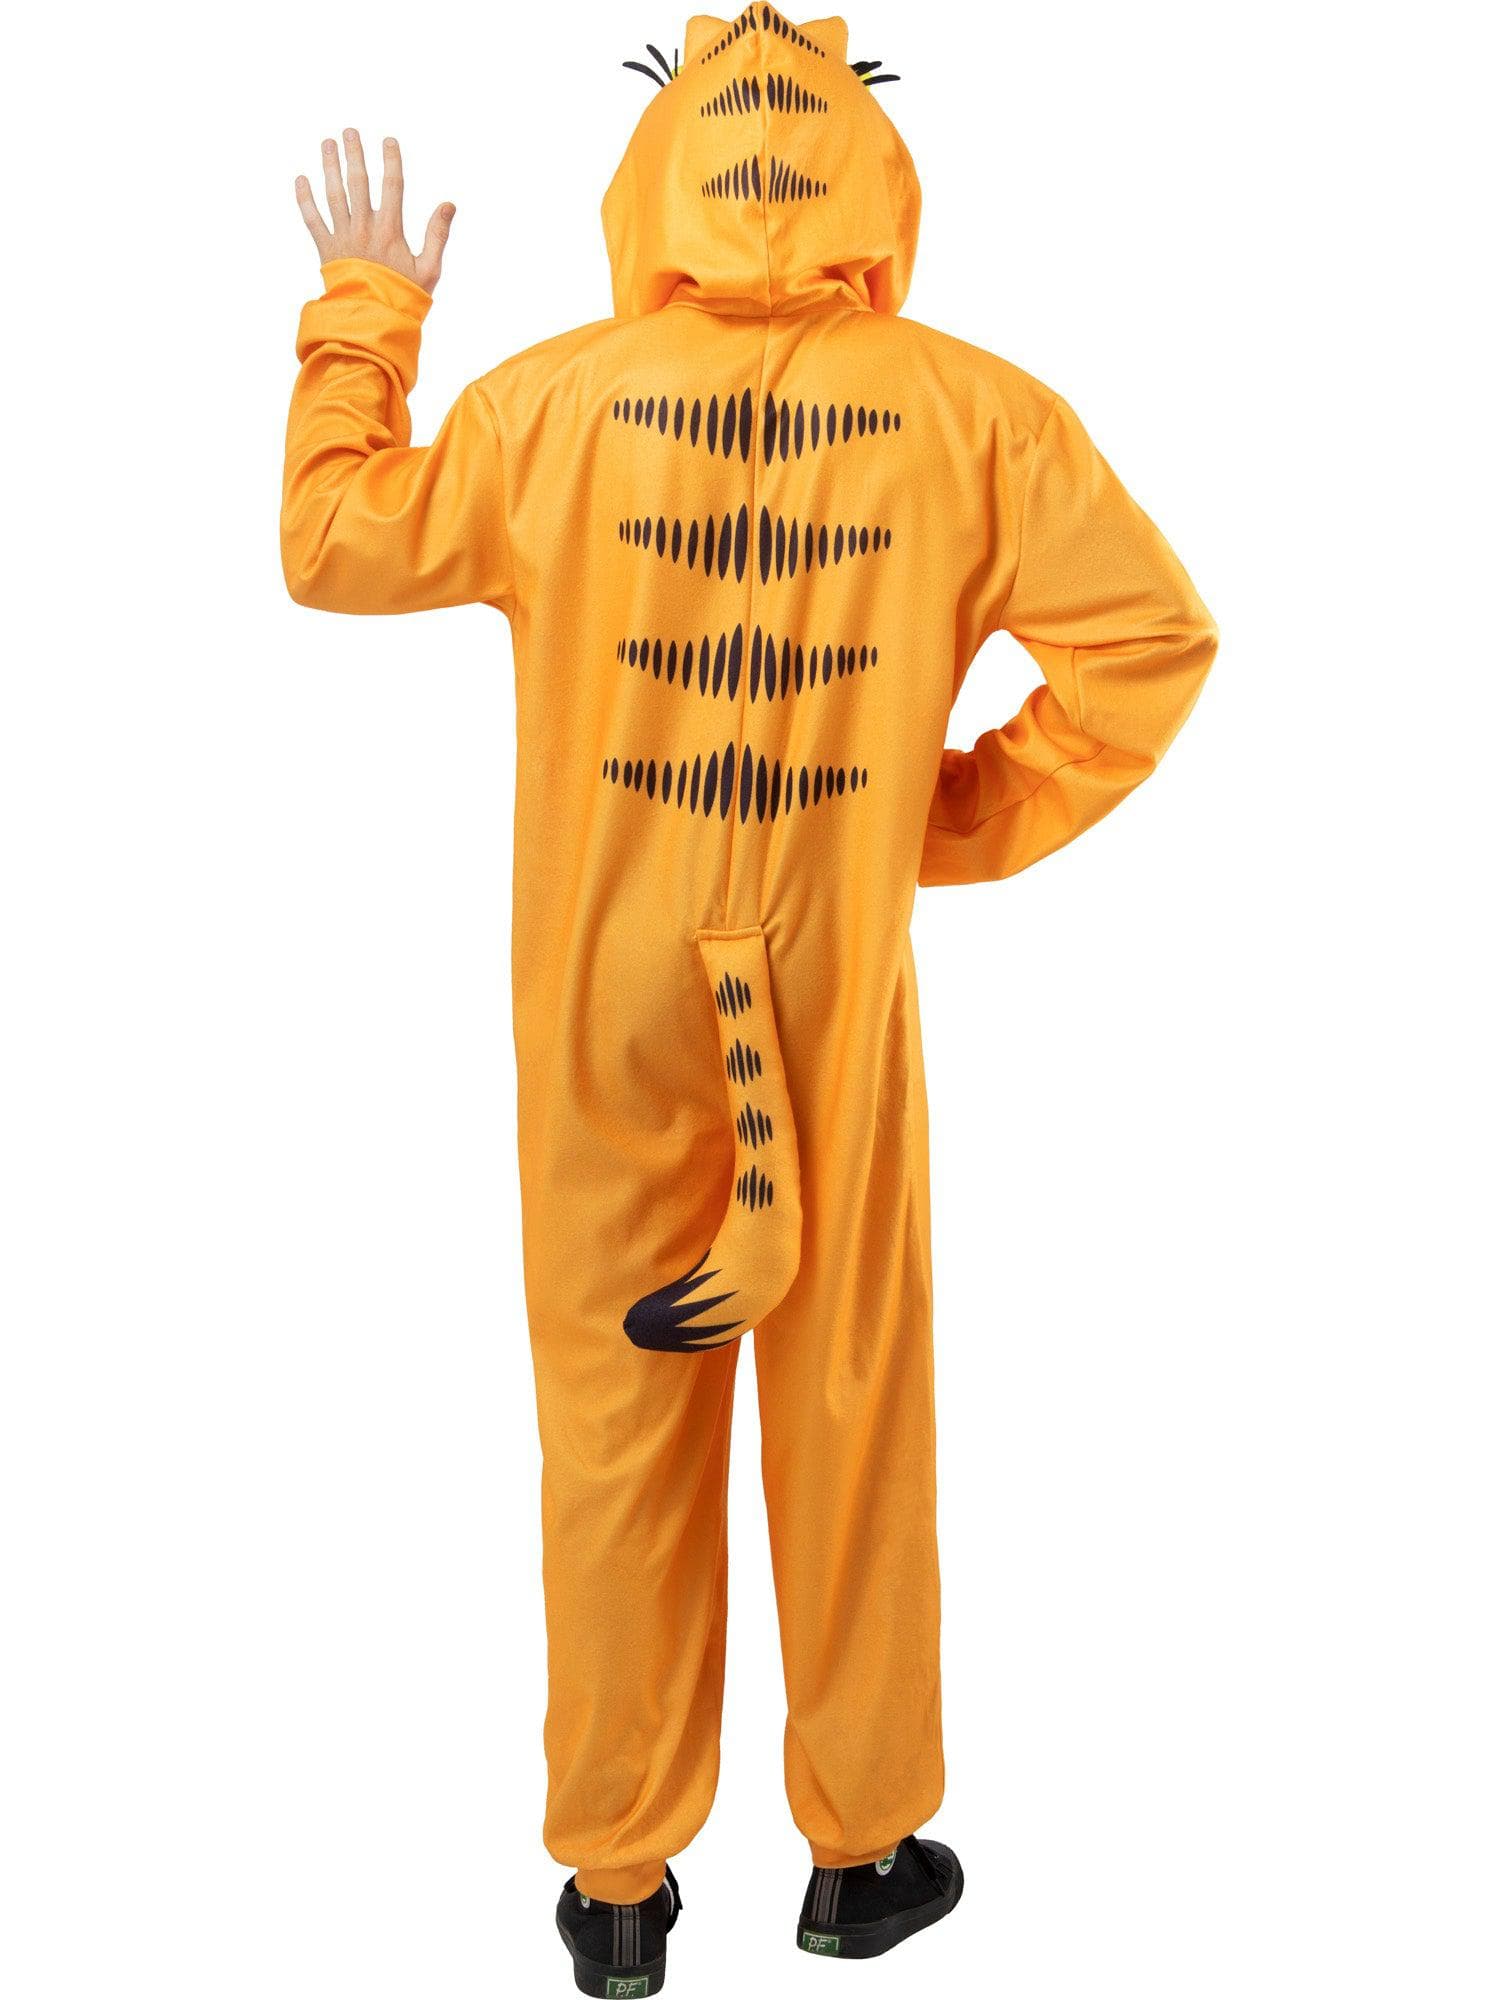 Garfield Adult Costume - costumes.com